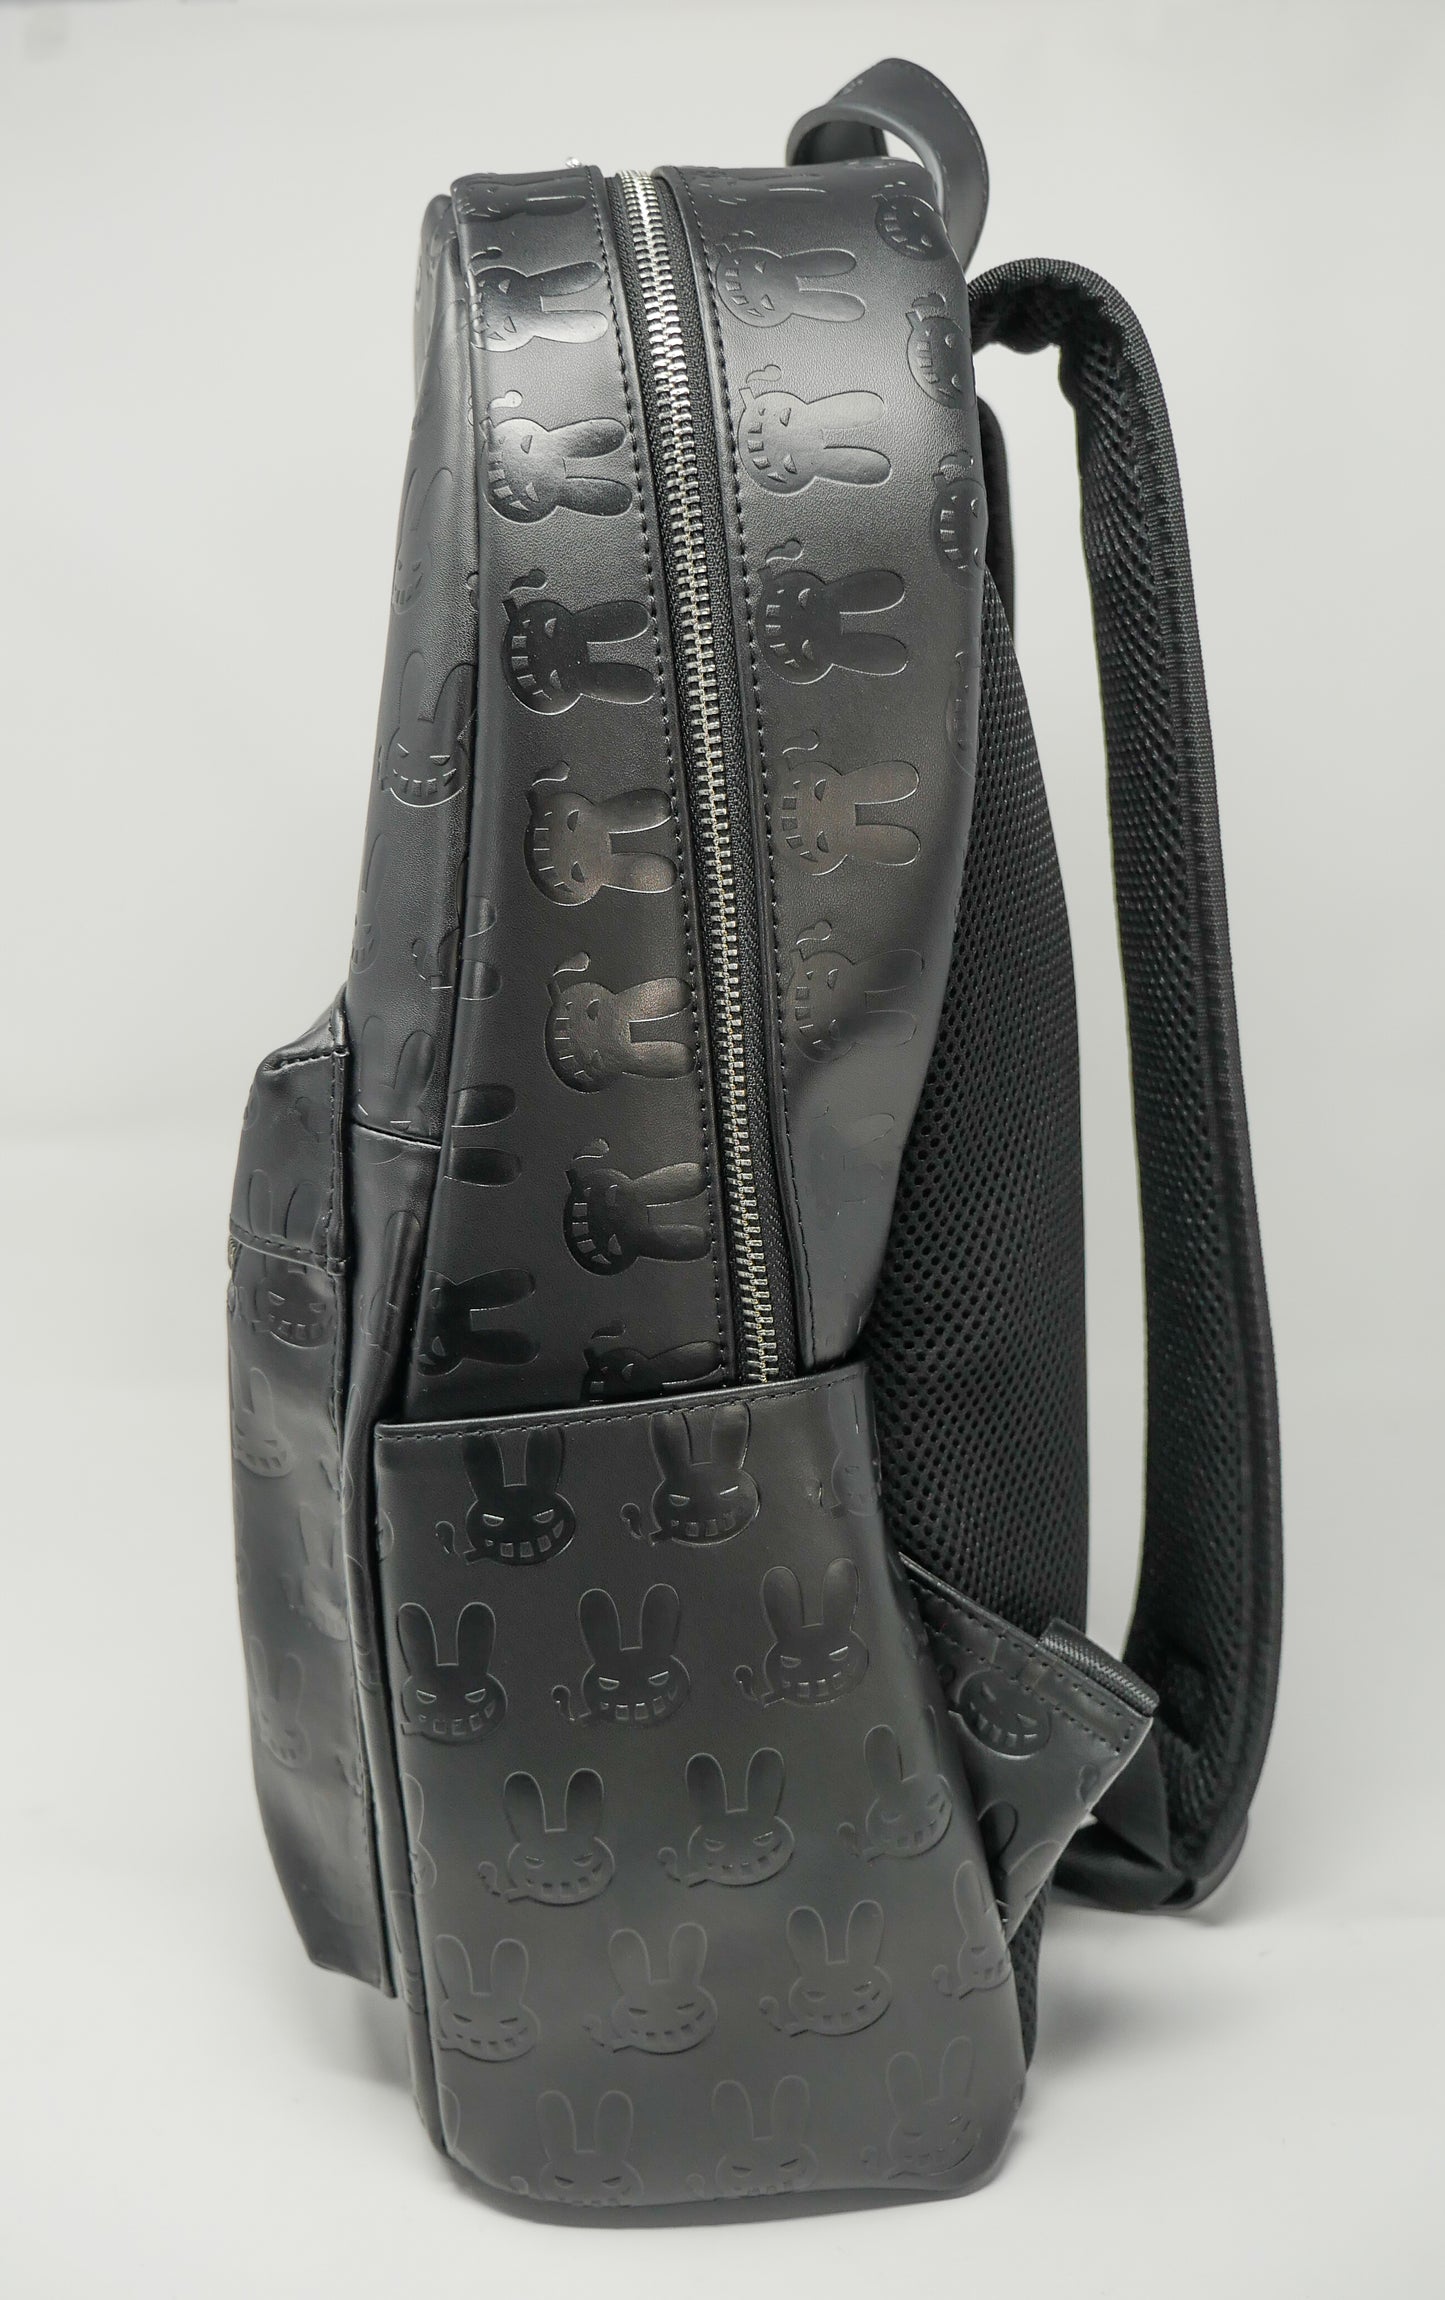 Dr. Zodiak’s Leather Backpack - Black - Limited edition